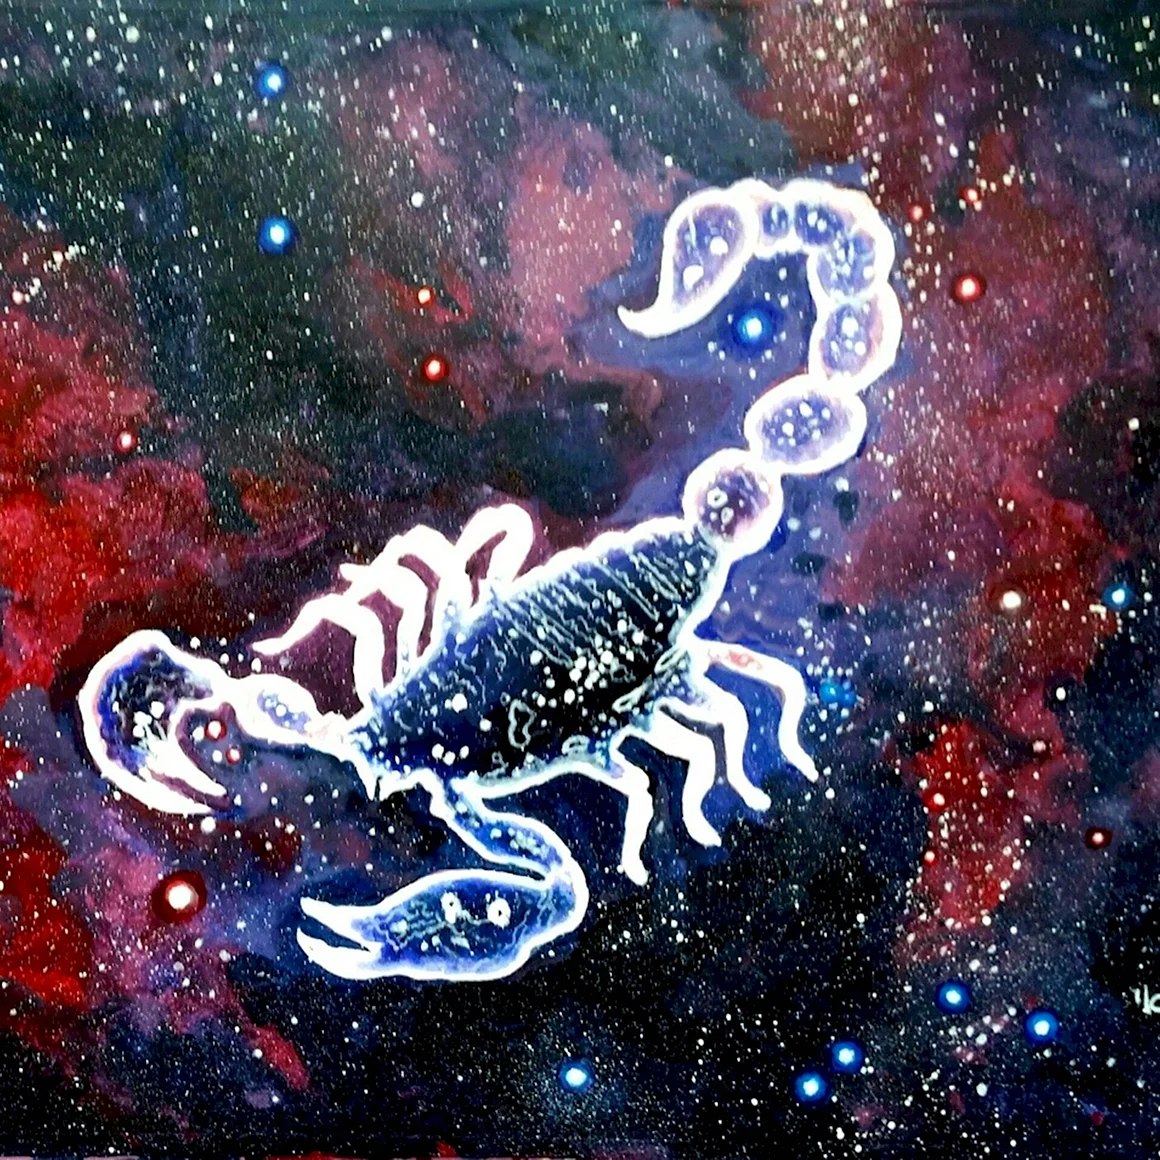 Celestial Scorpion